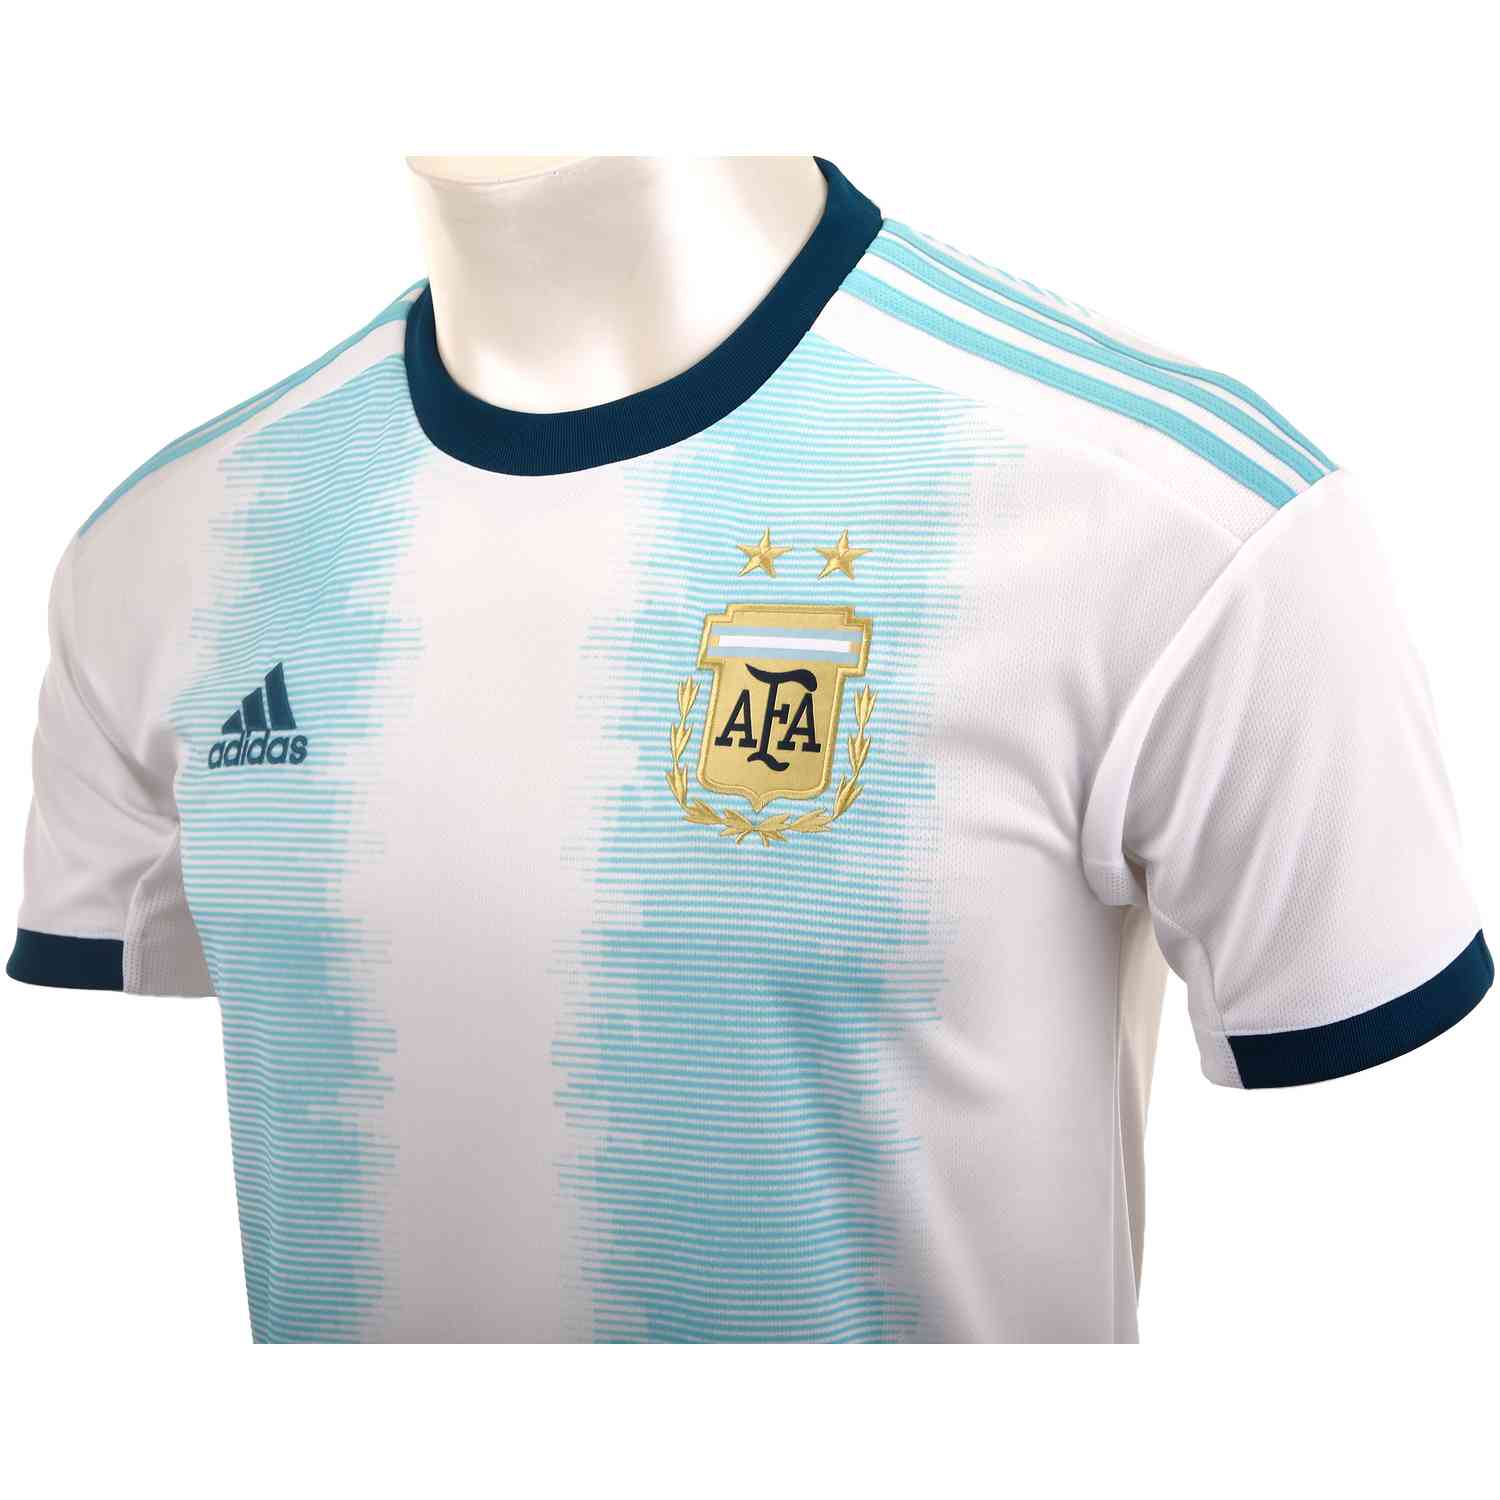 airo sport argentina home jersey